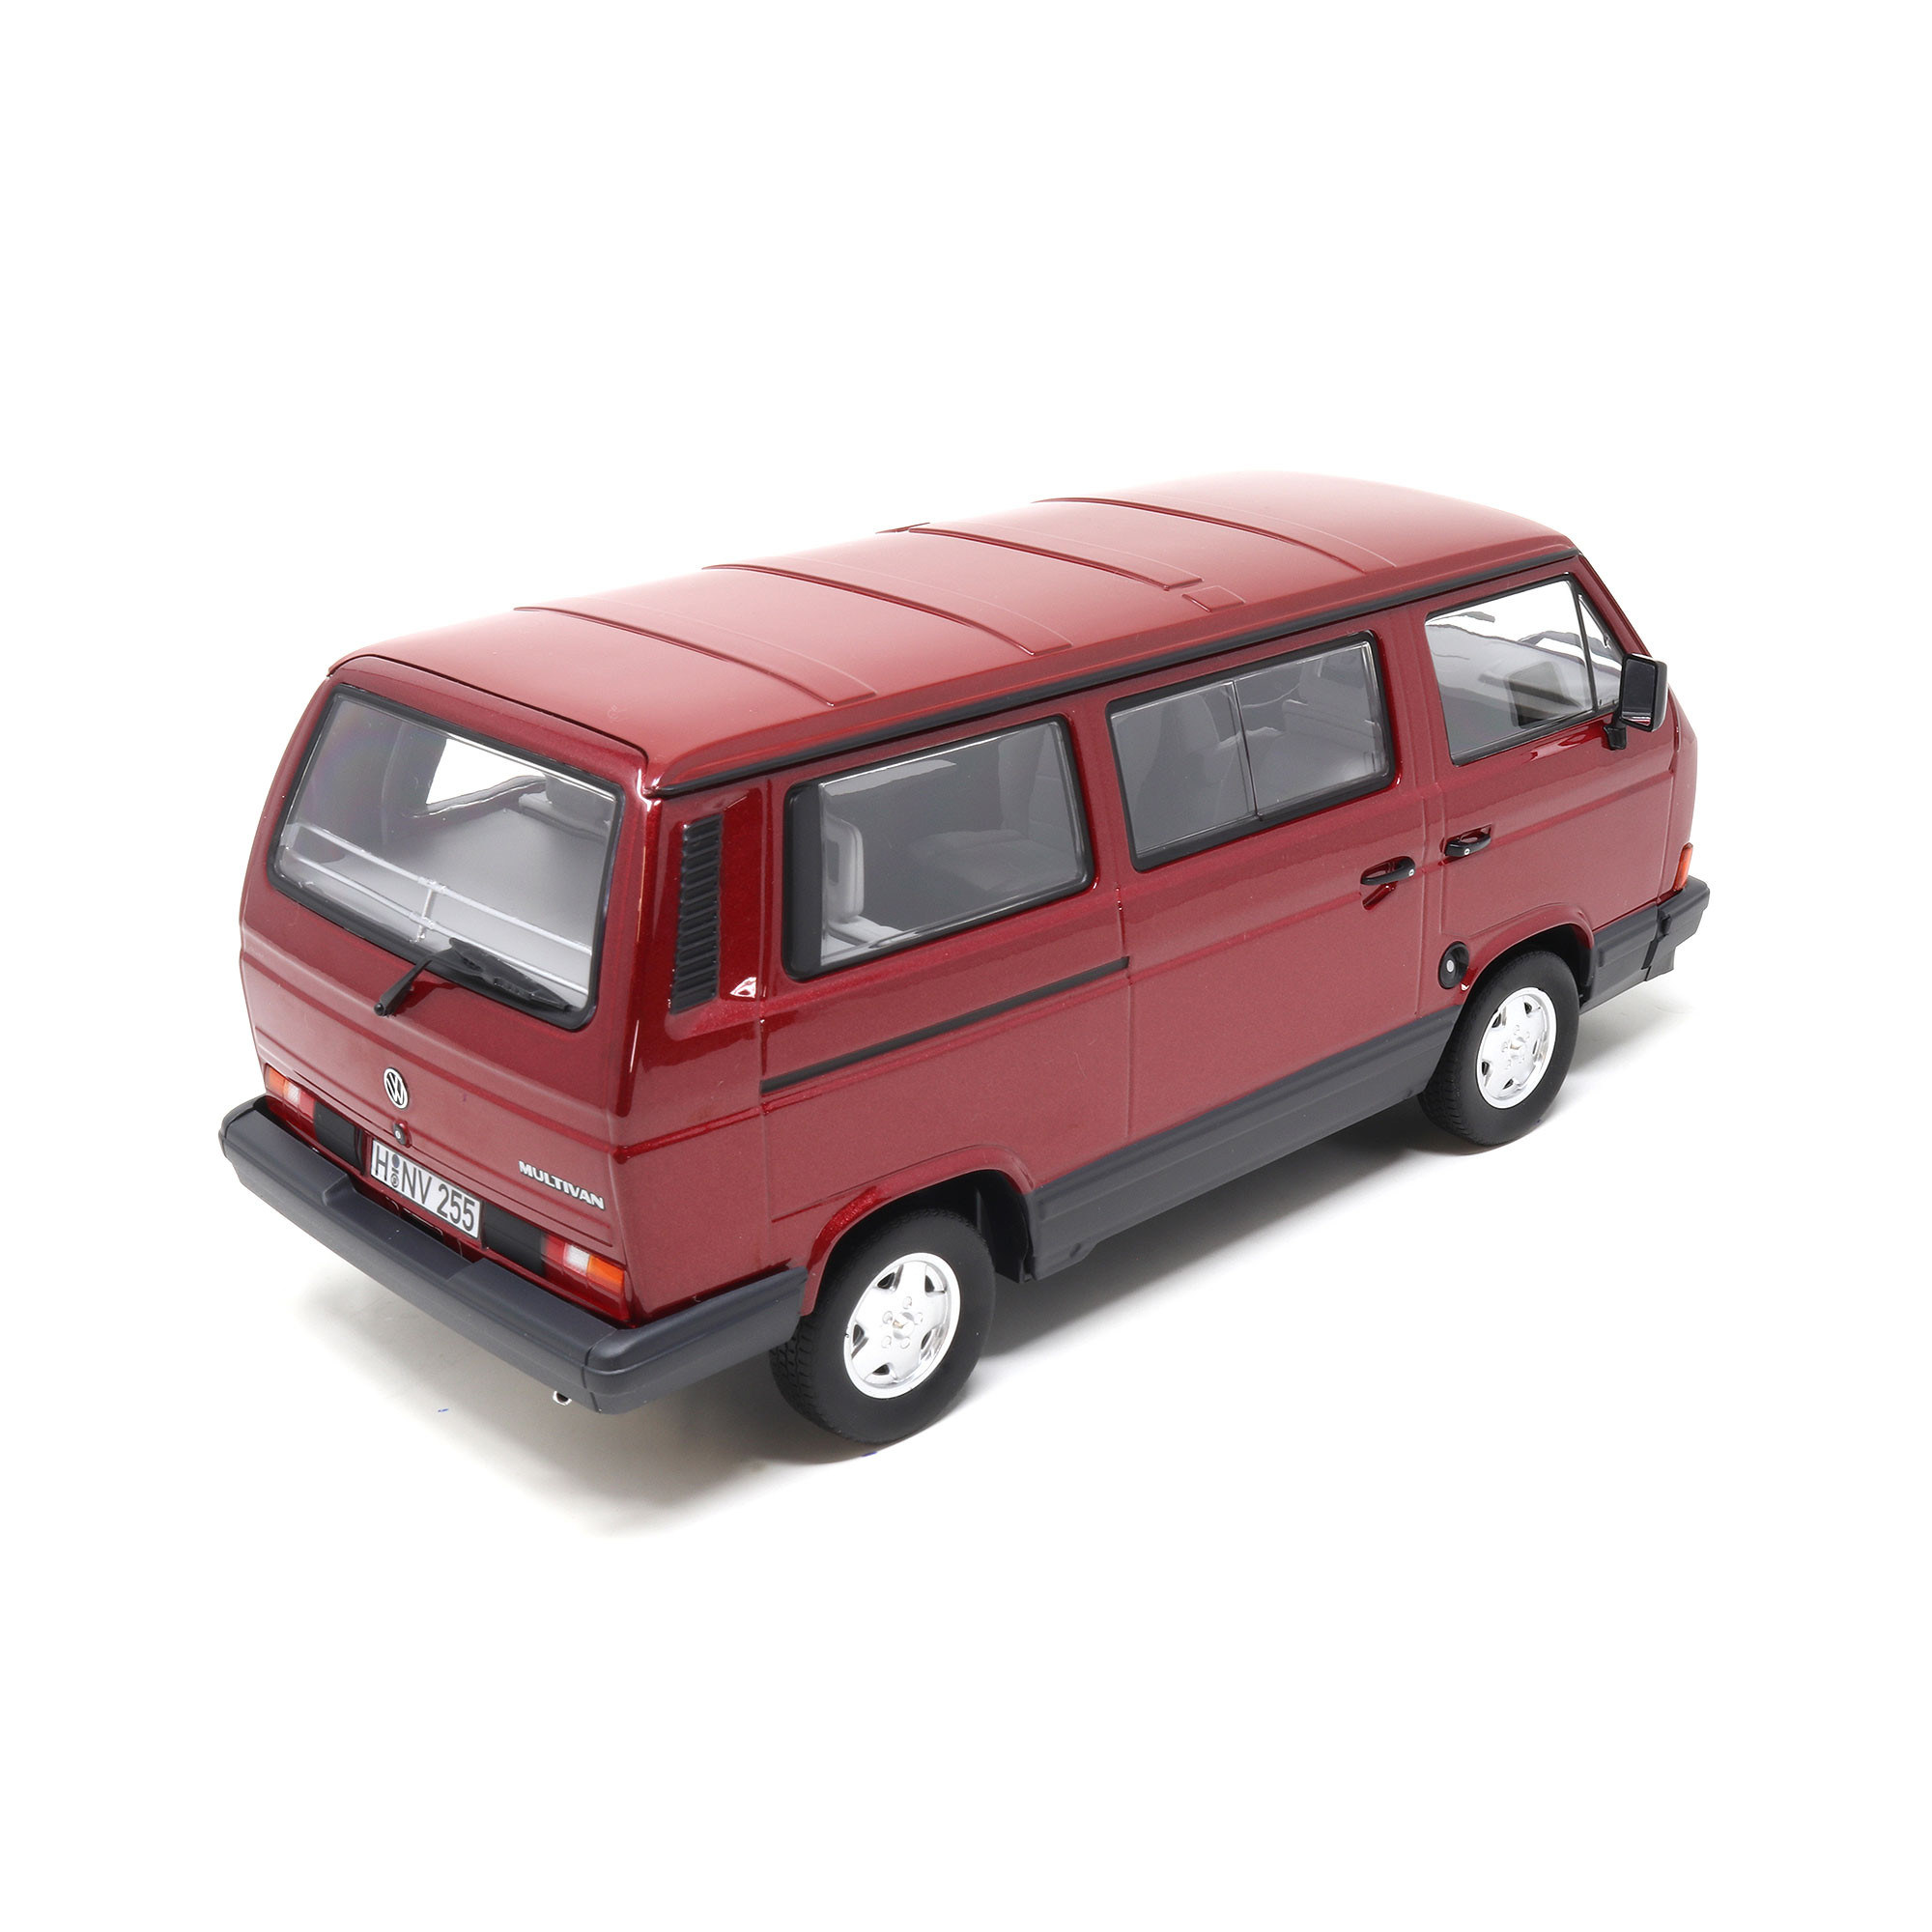 VW T3 Multivan Bus Tizianrot 1:18 Norev 255099302 645 1/18 Modellauto Rot